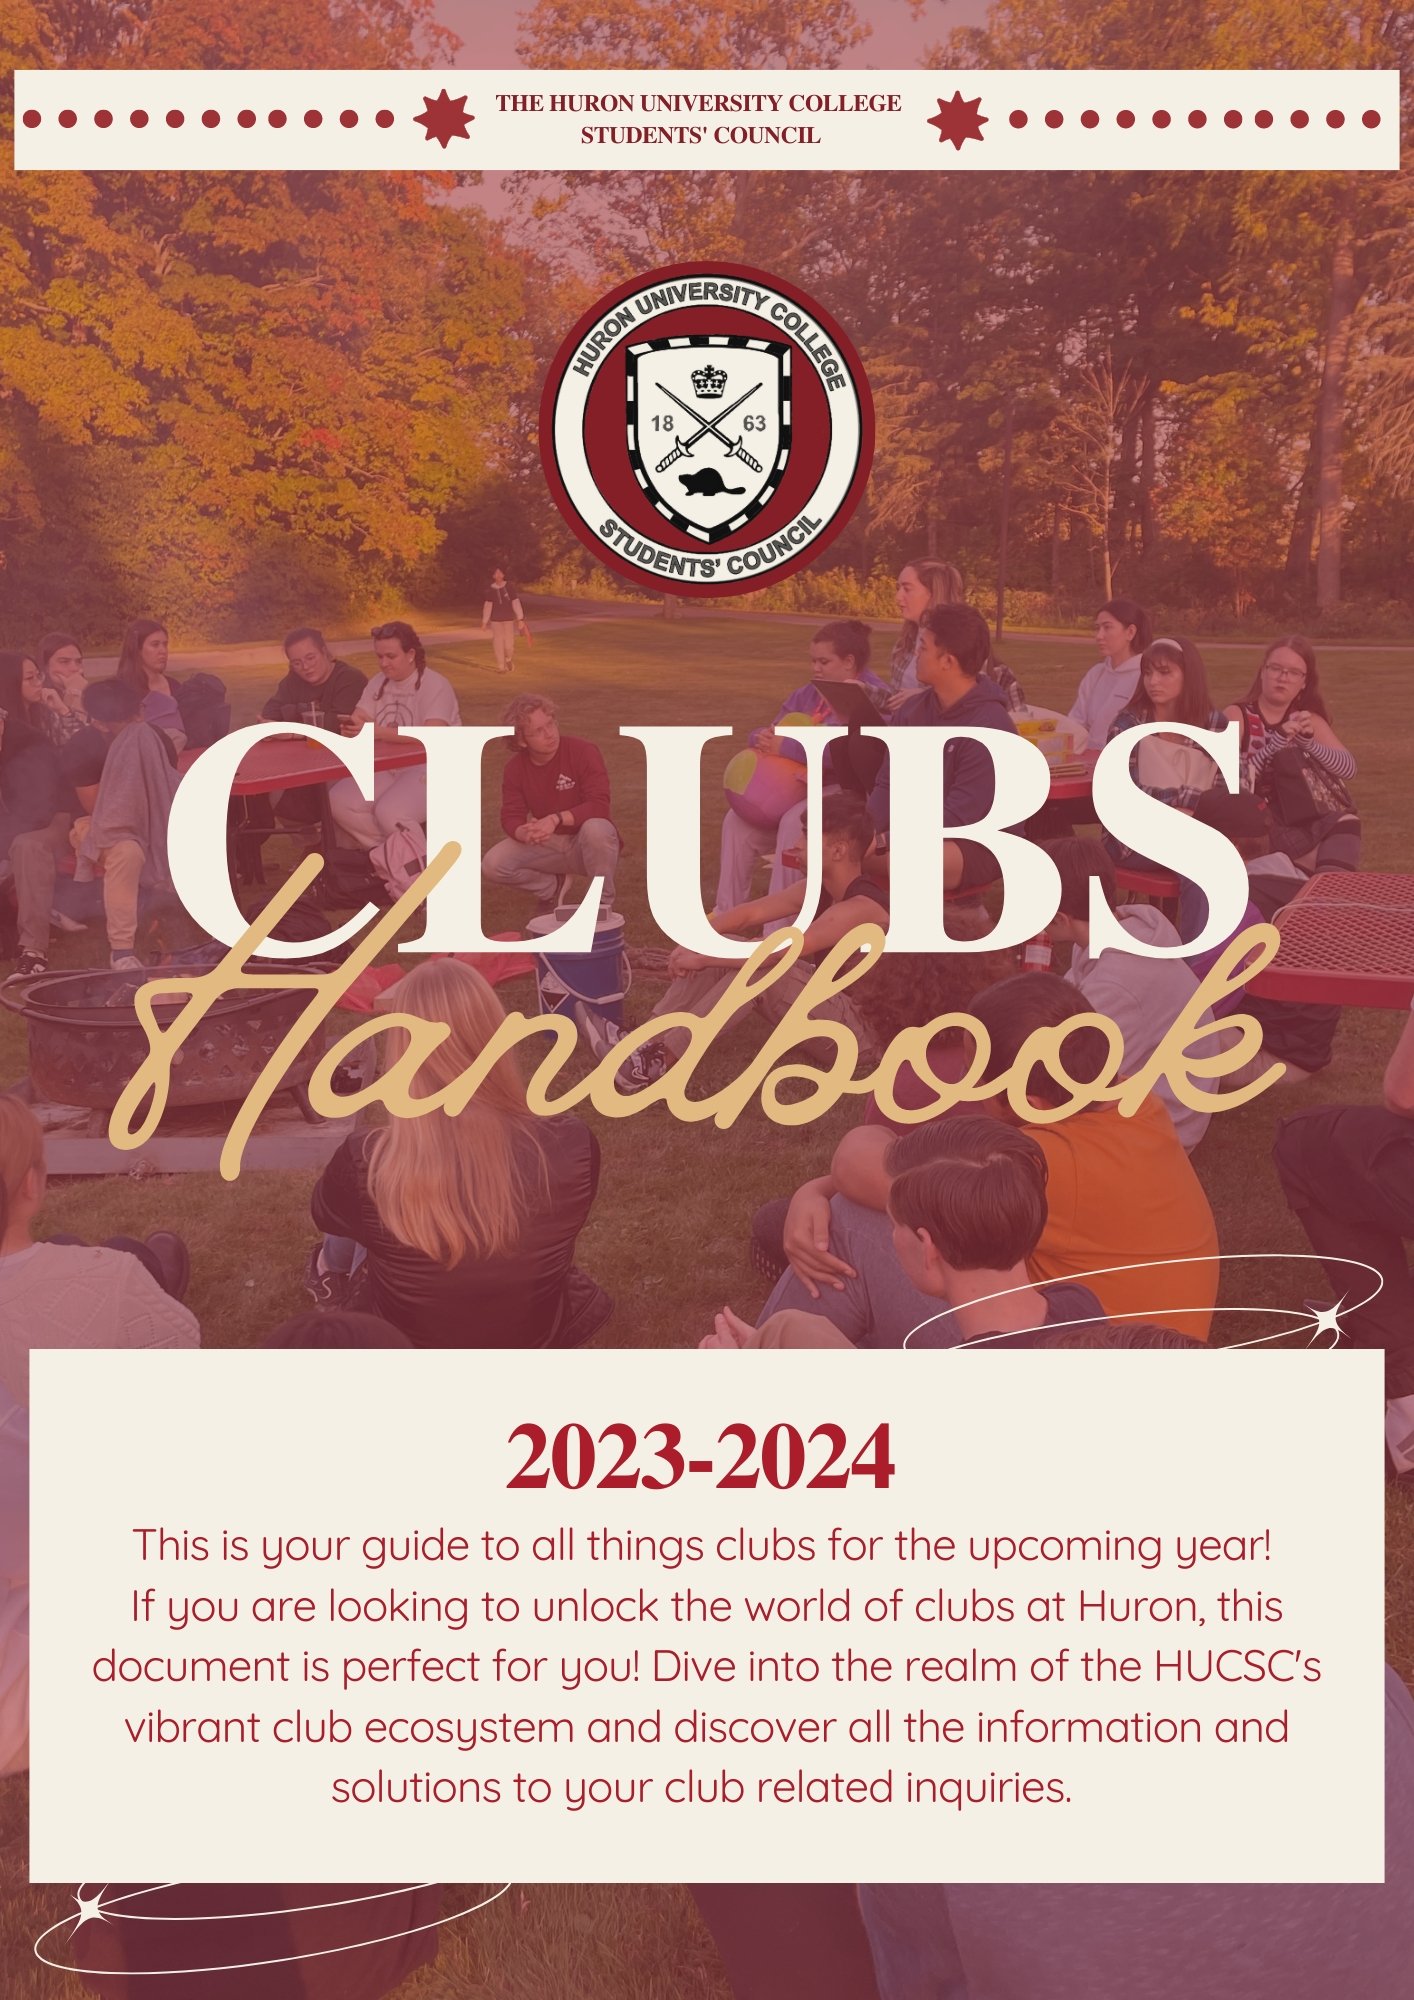 Club Information